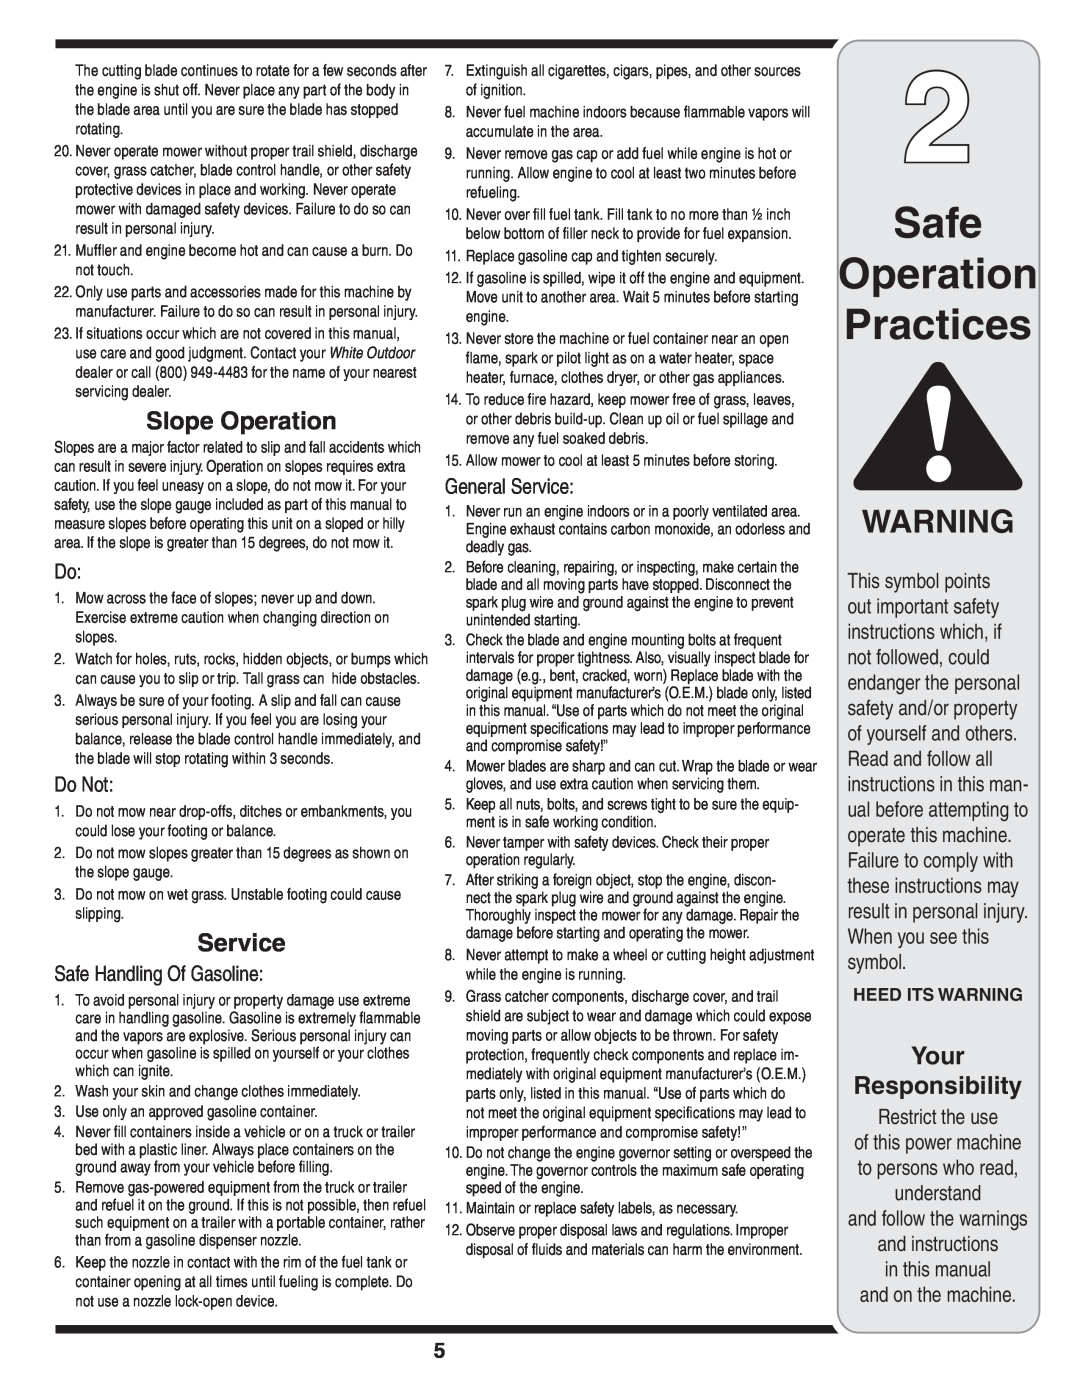 White Outdoor 83M Safe Operation Practices, Slope Operation, Do Not, Safe Handling Of Gasoline, General Service 